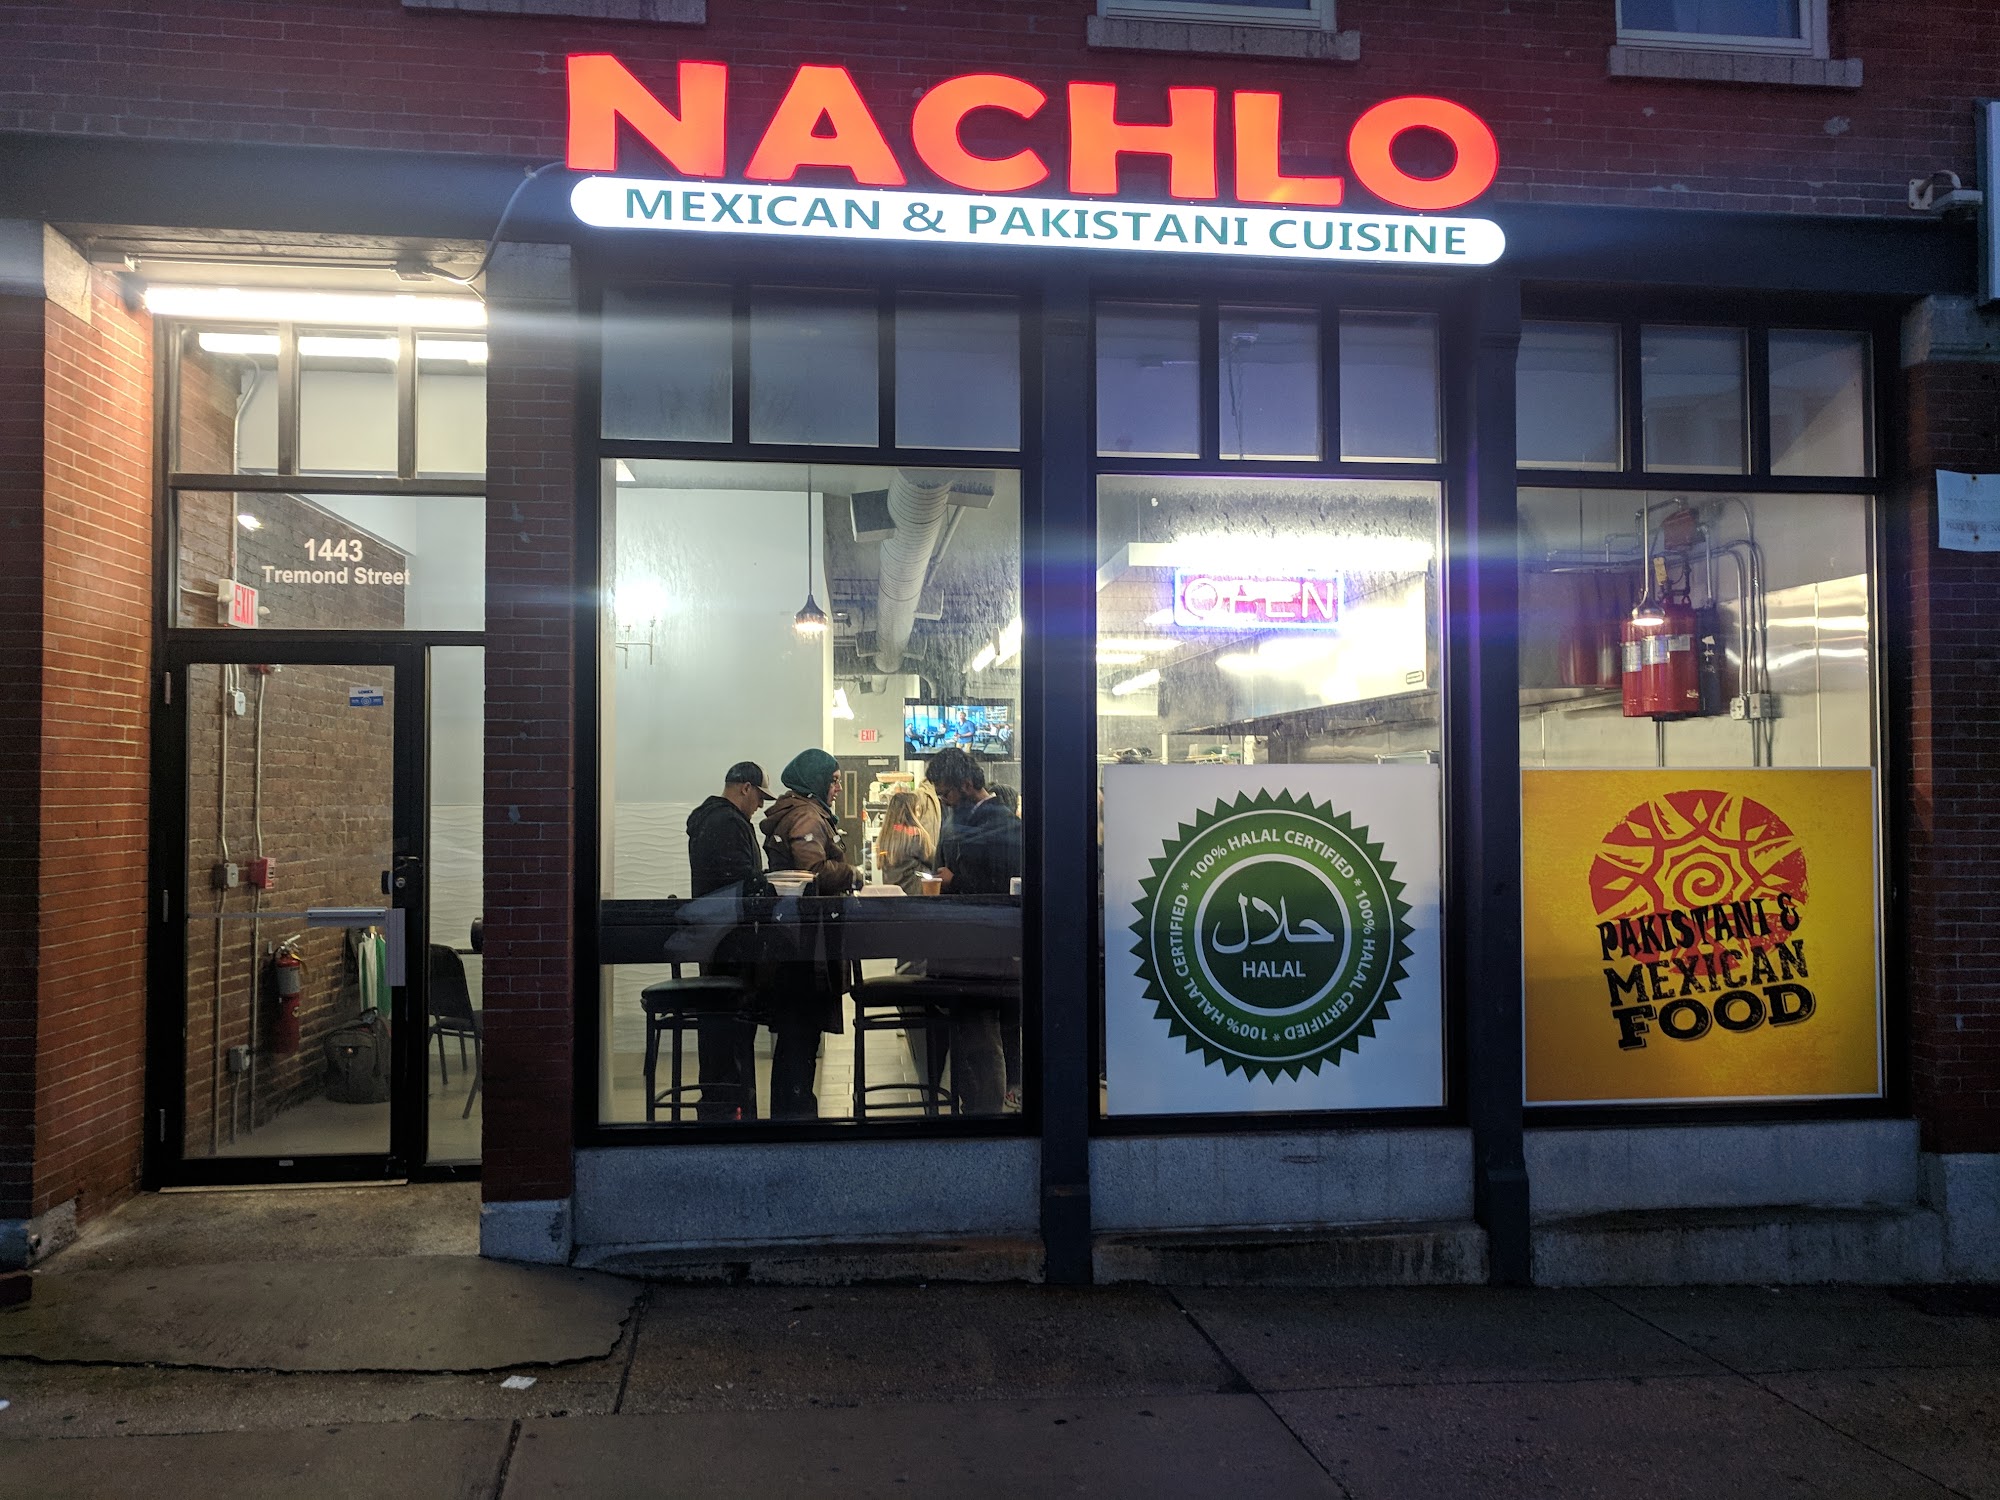 Nachlo Mexican & Pakistani Cuisine